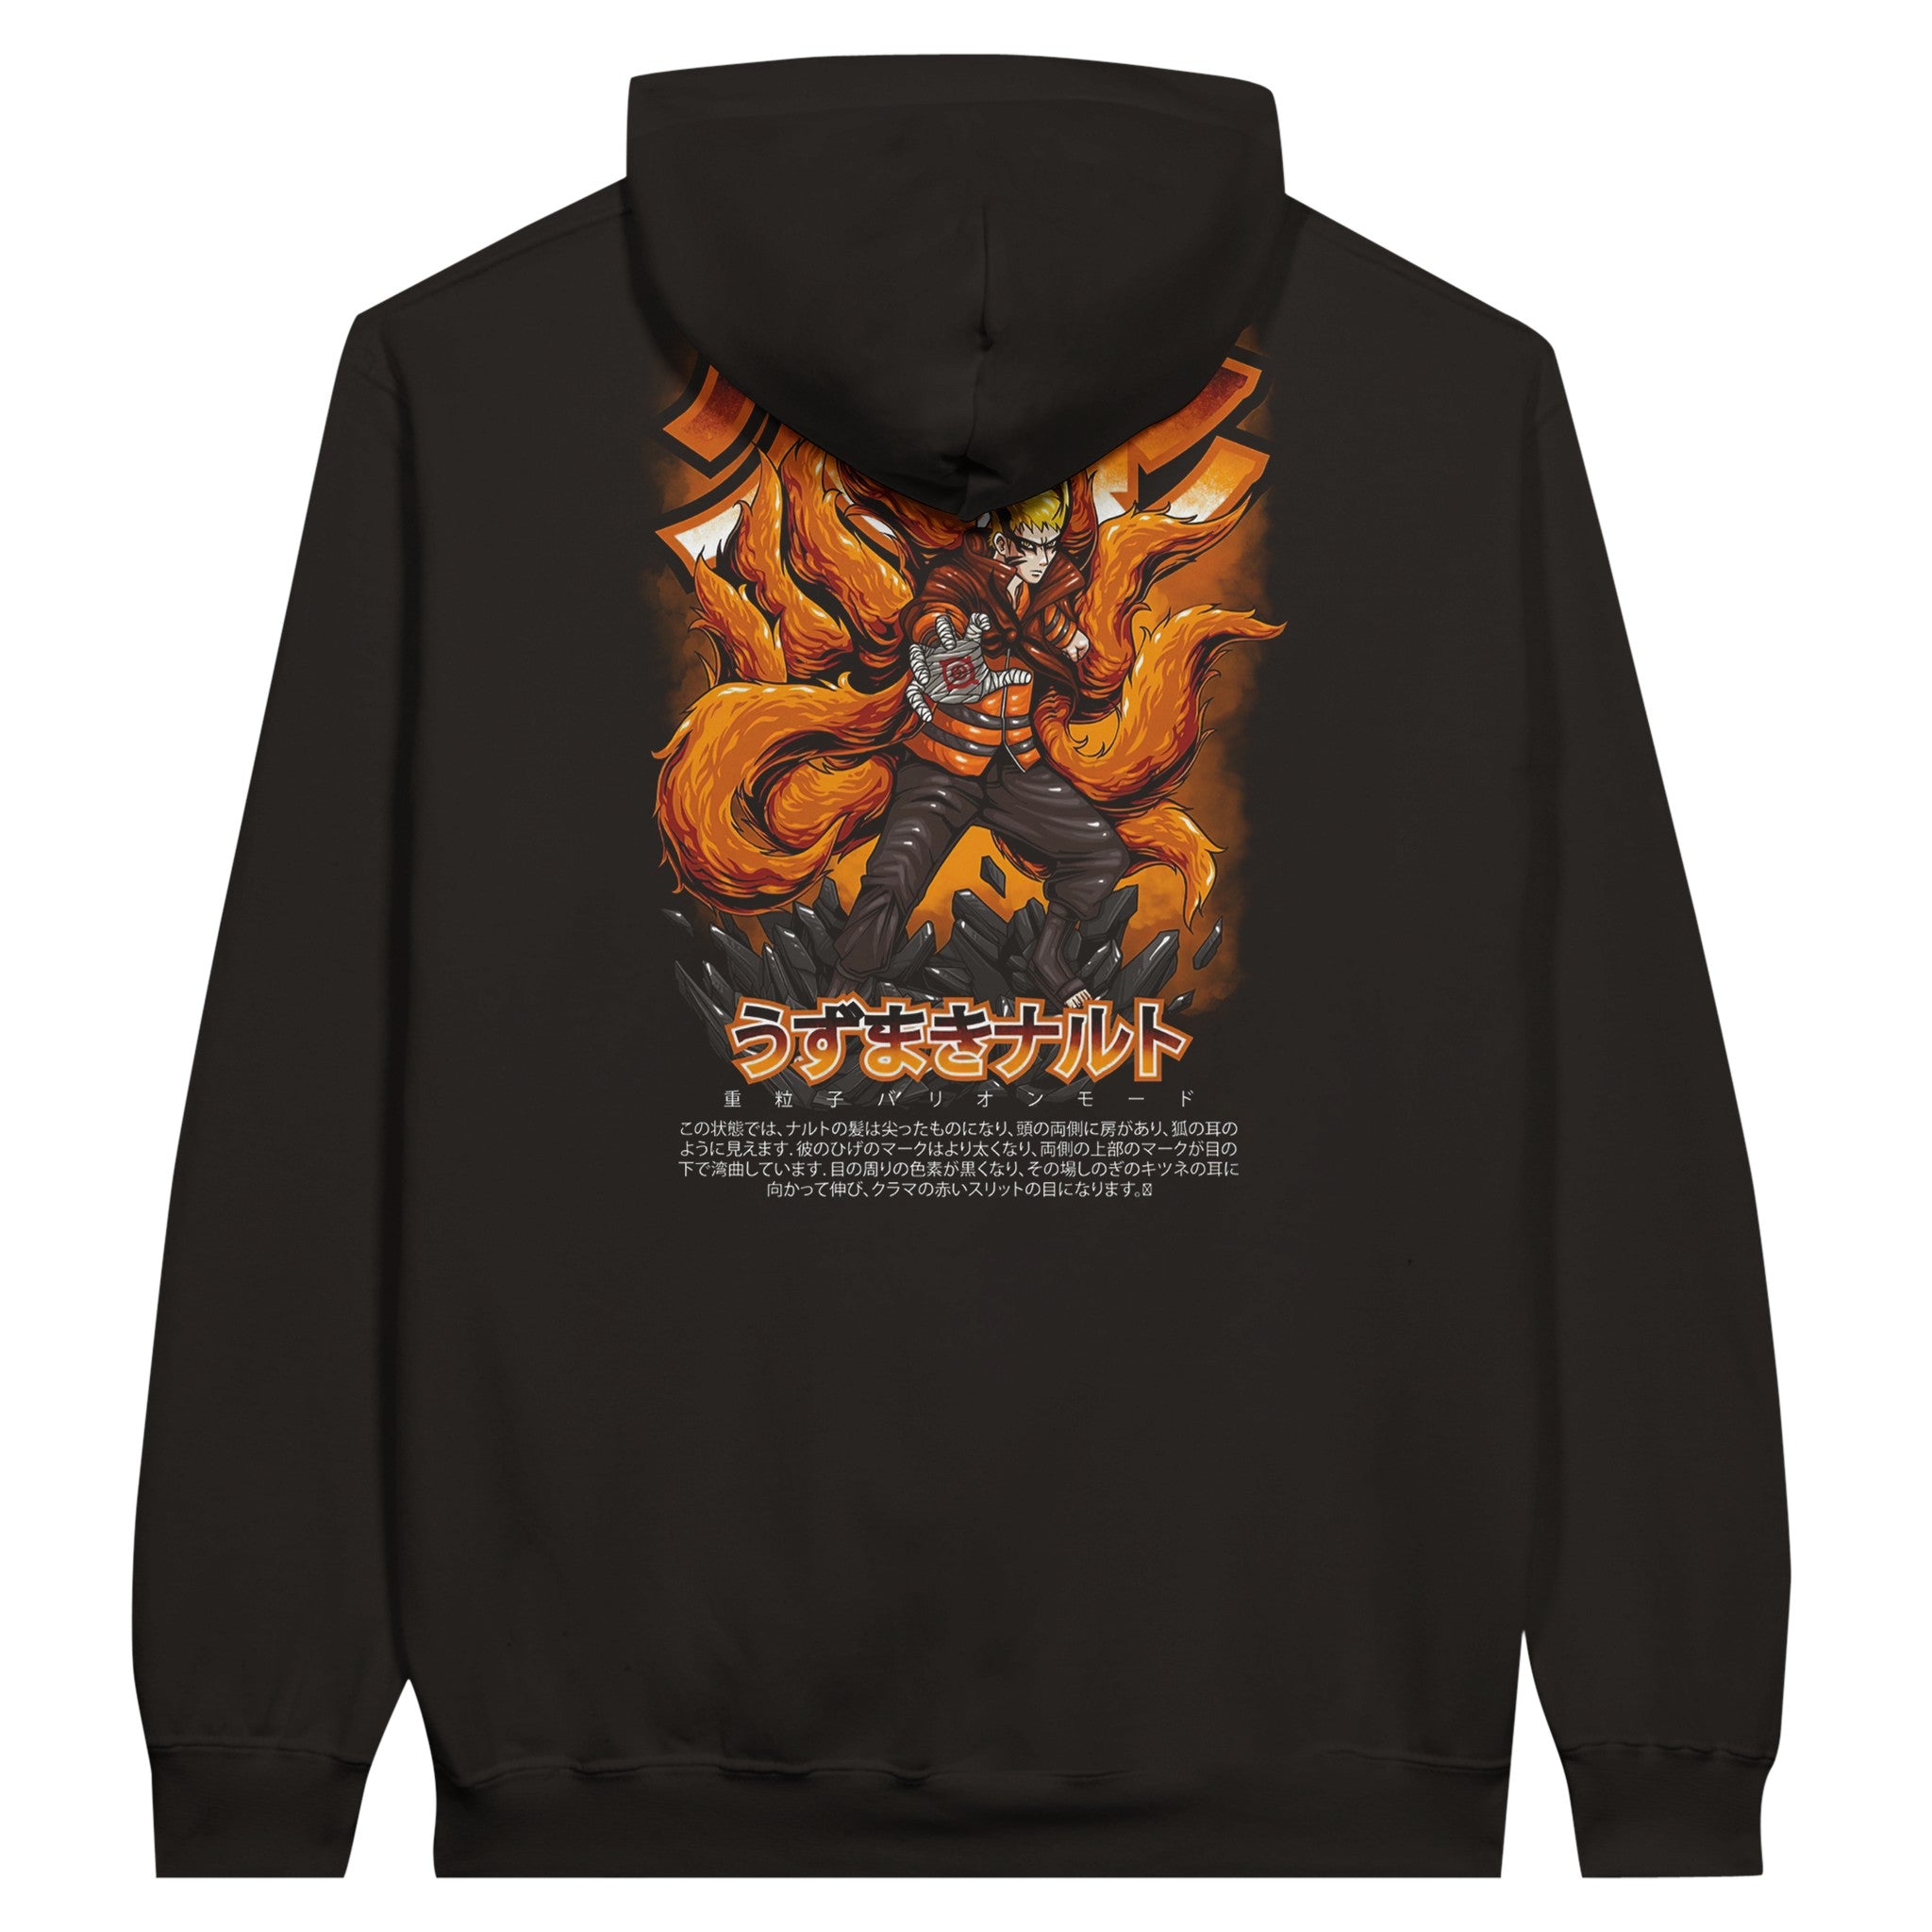 shop and buy naruto anime clothing hoodie